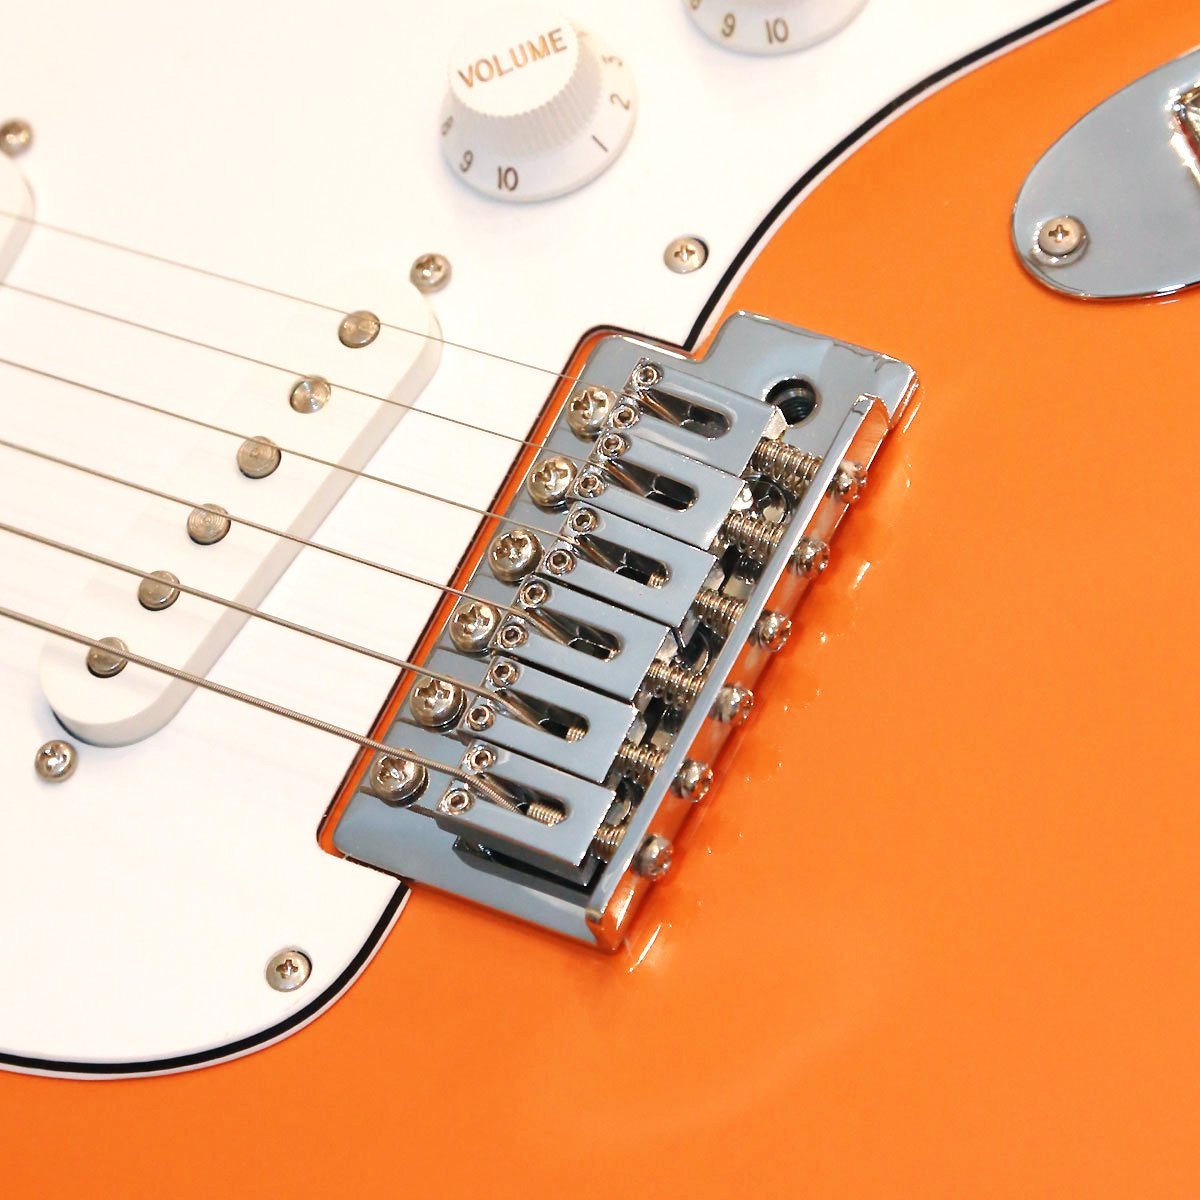 【HOT正規品】送料無料 特価 Greco グレコ エレキギター「WIS-3S, Light Orange / Merbau Fingerboard」 ライトオレンジ 検品調整済出荷 グレコ